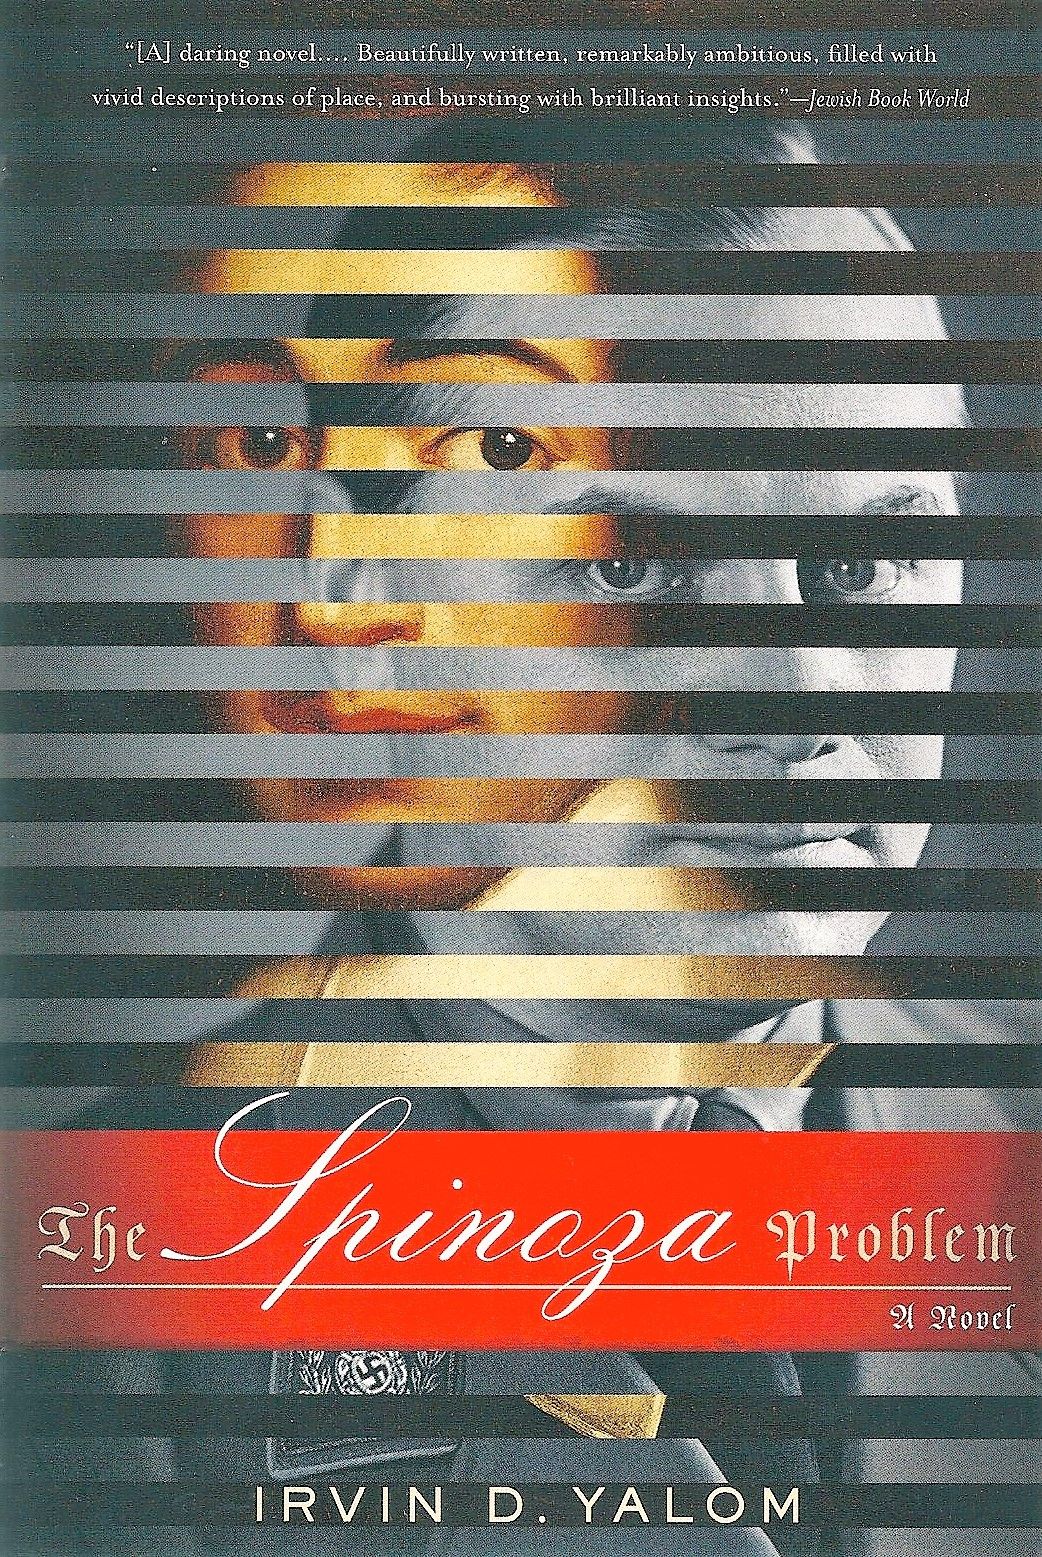 Irvin D. Yalom: The Spinoza problem (2012, Basic Books)